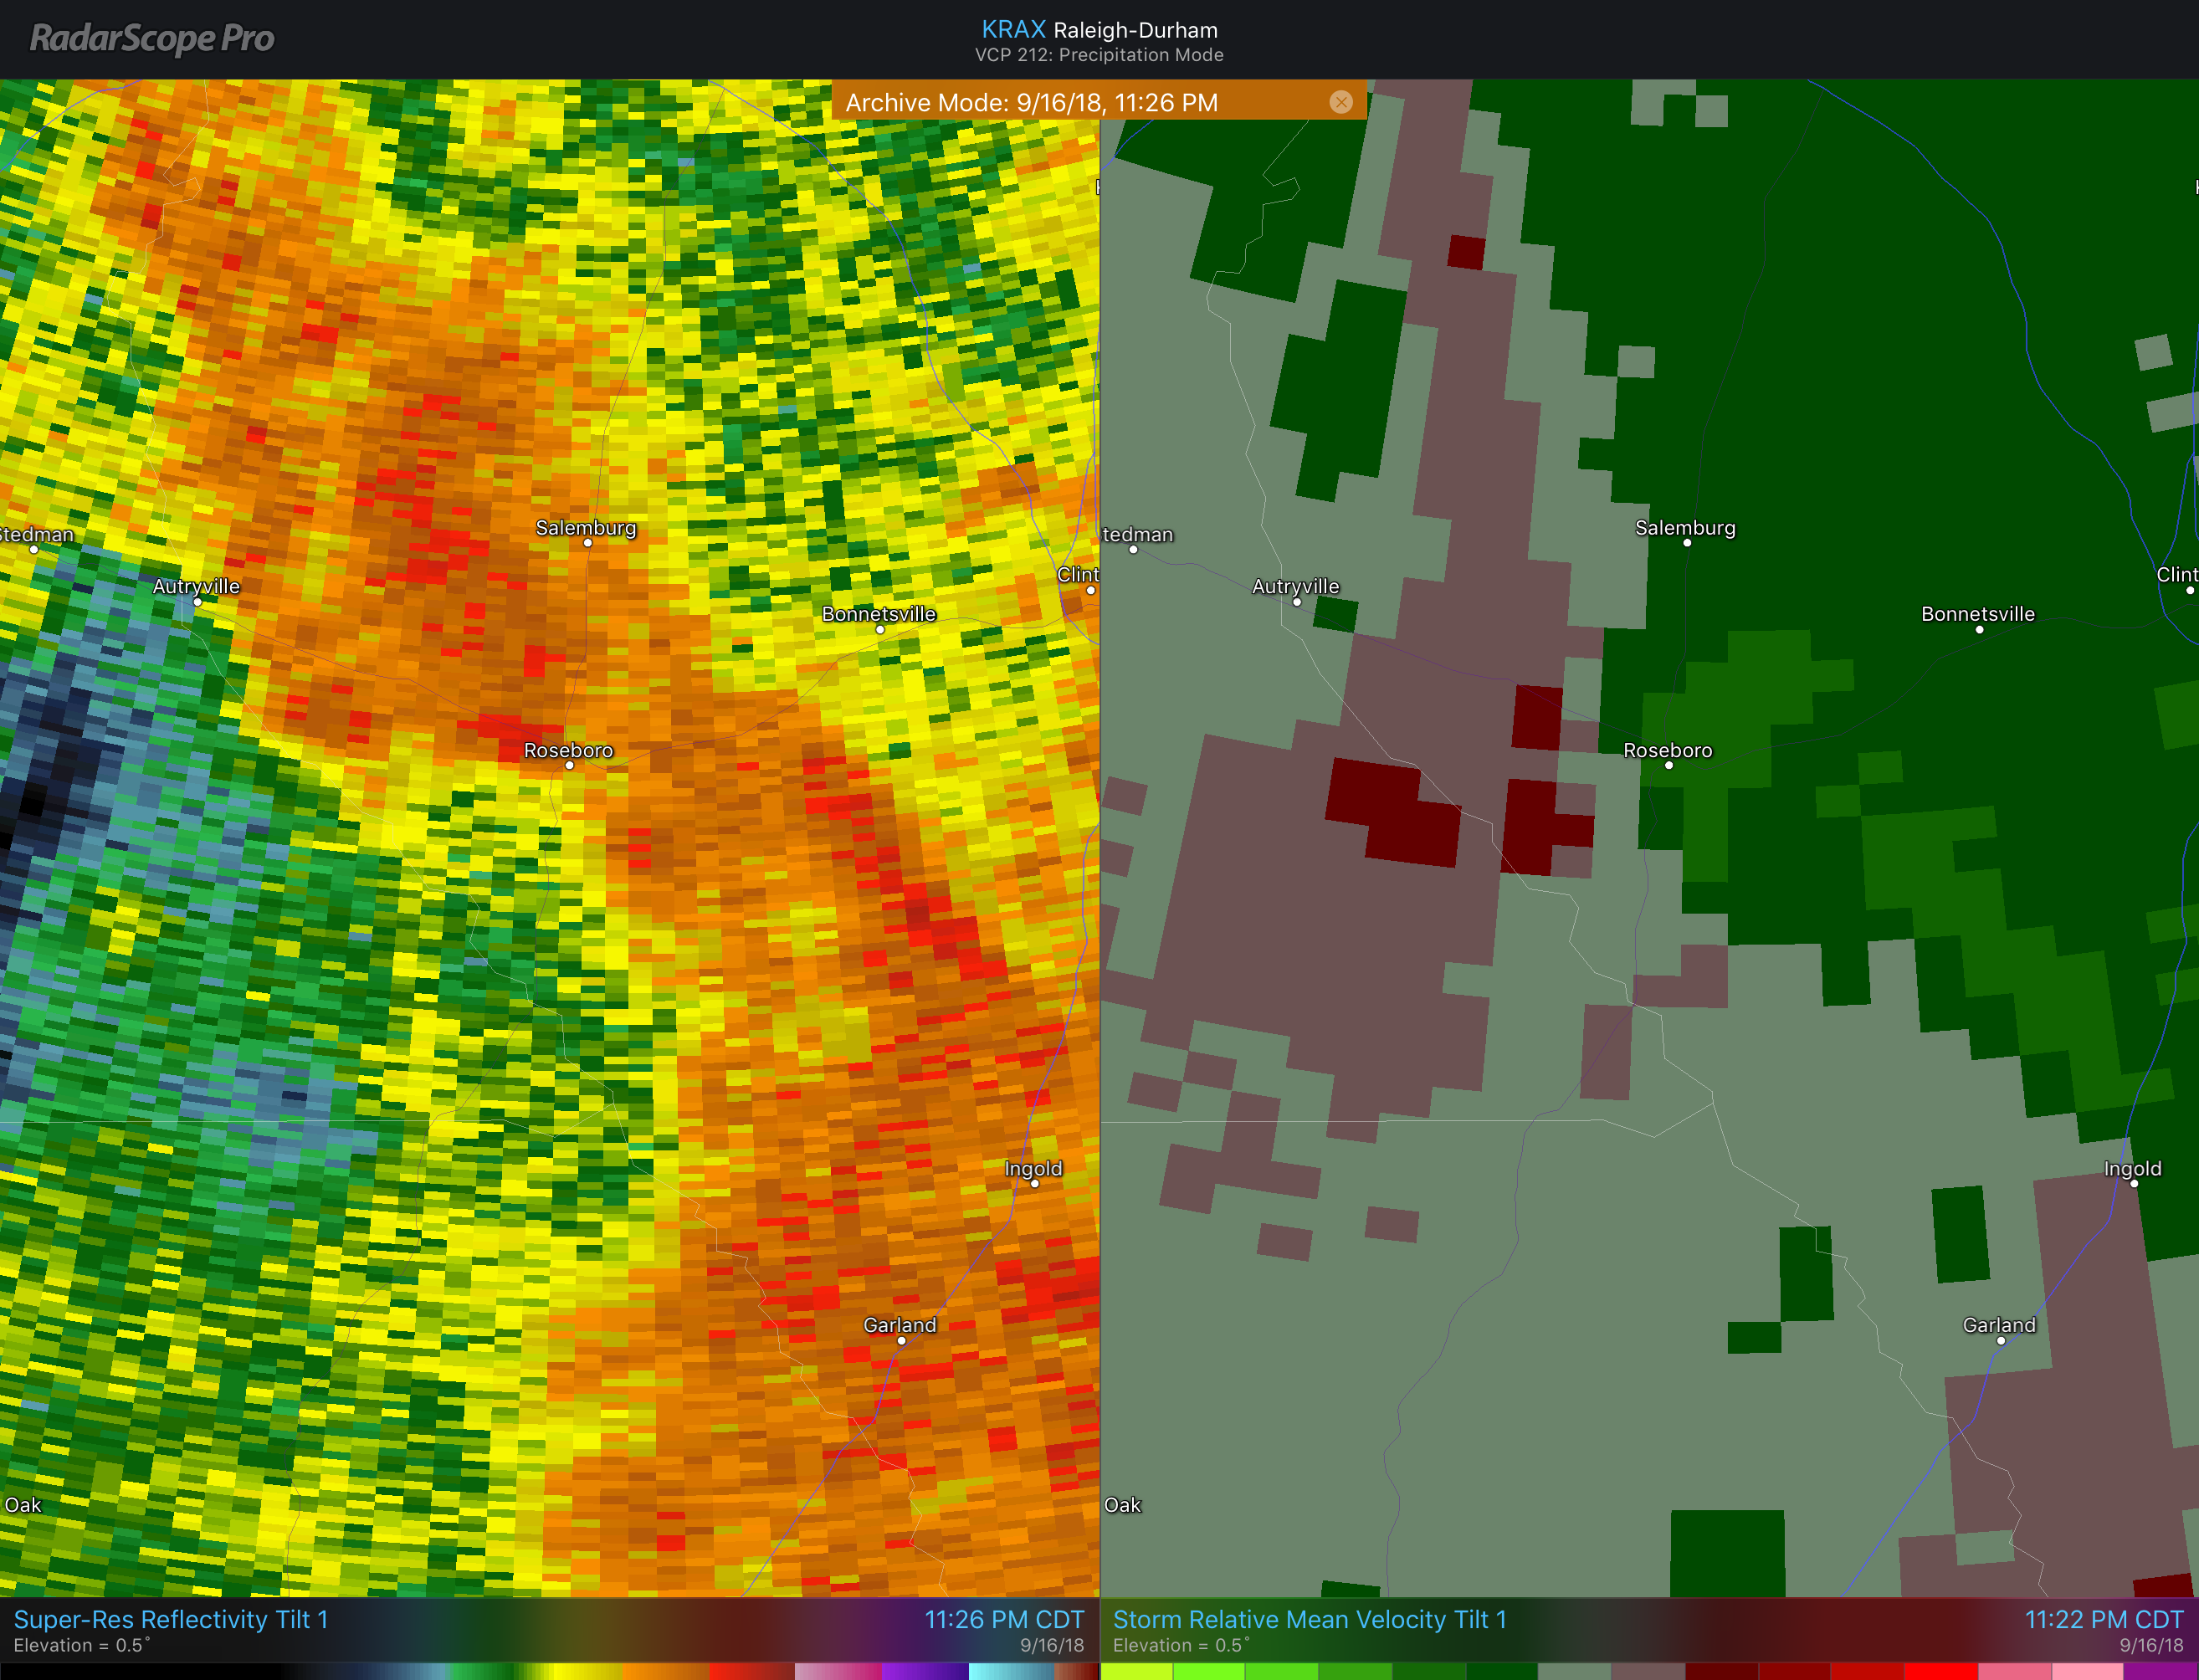 Roseboro, NC Tornado Reflectivity and Storm Relative Velocity 9/16/18